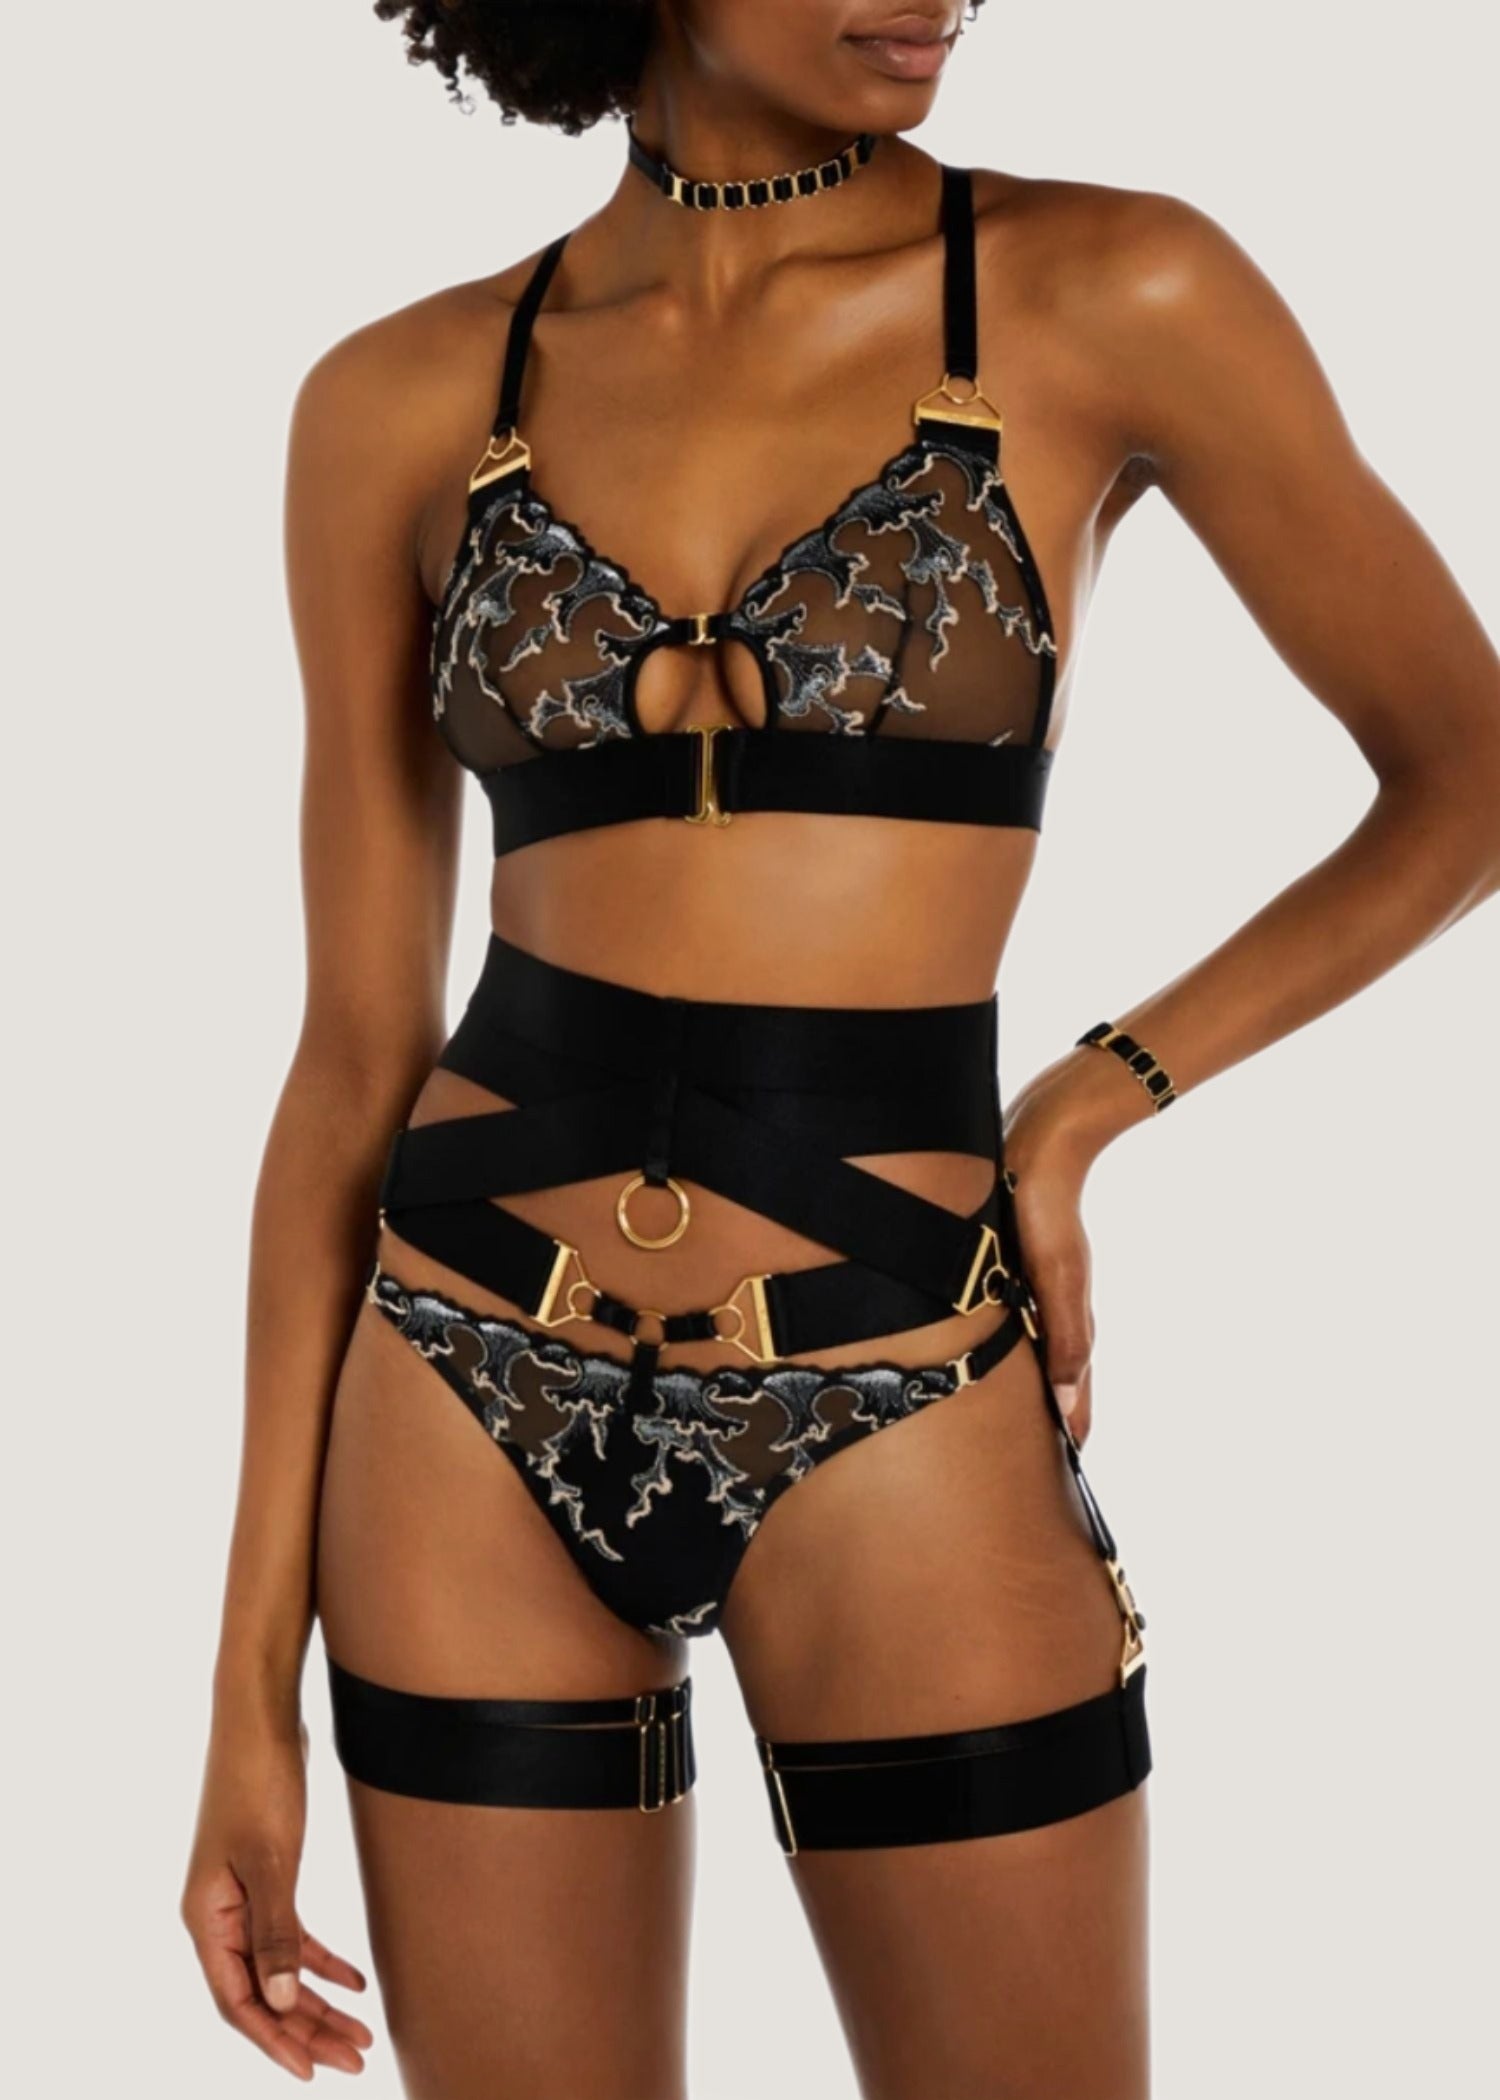 Bordelle Aurea Suspender Belt (Black) - Luxury Lingerie - Sexy Lingerie